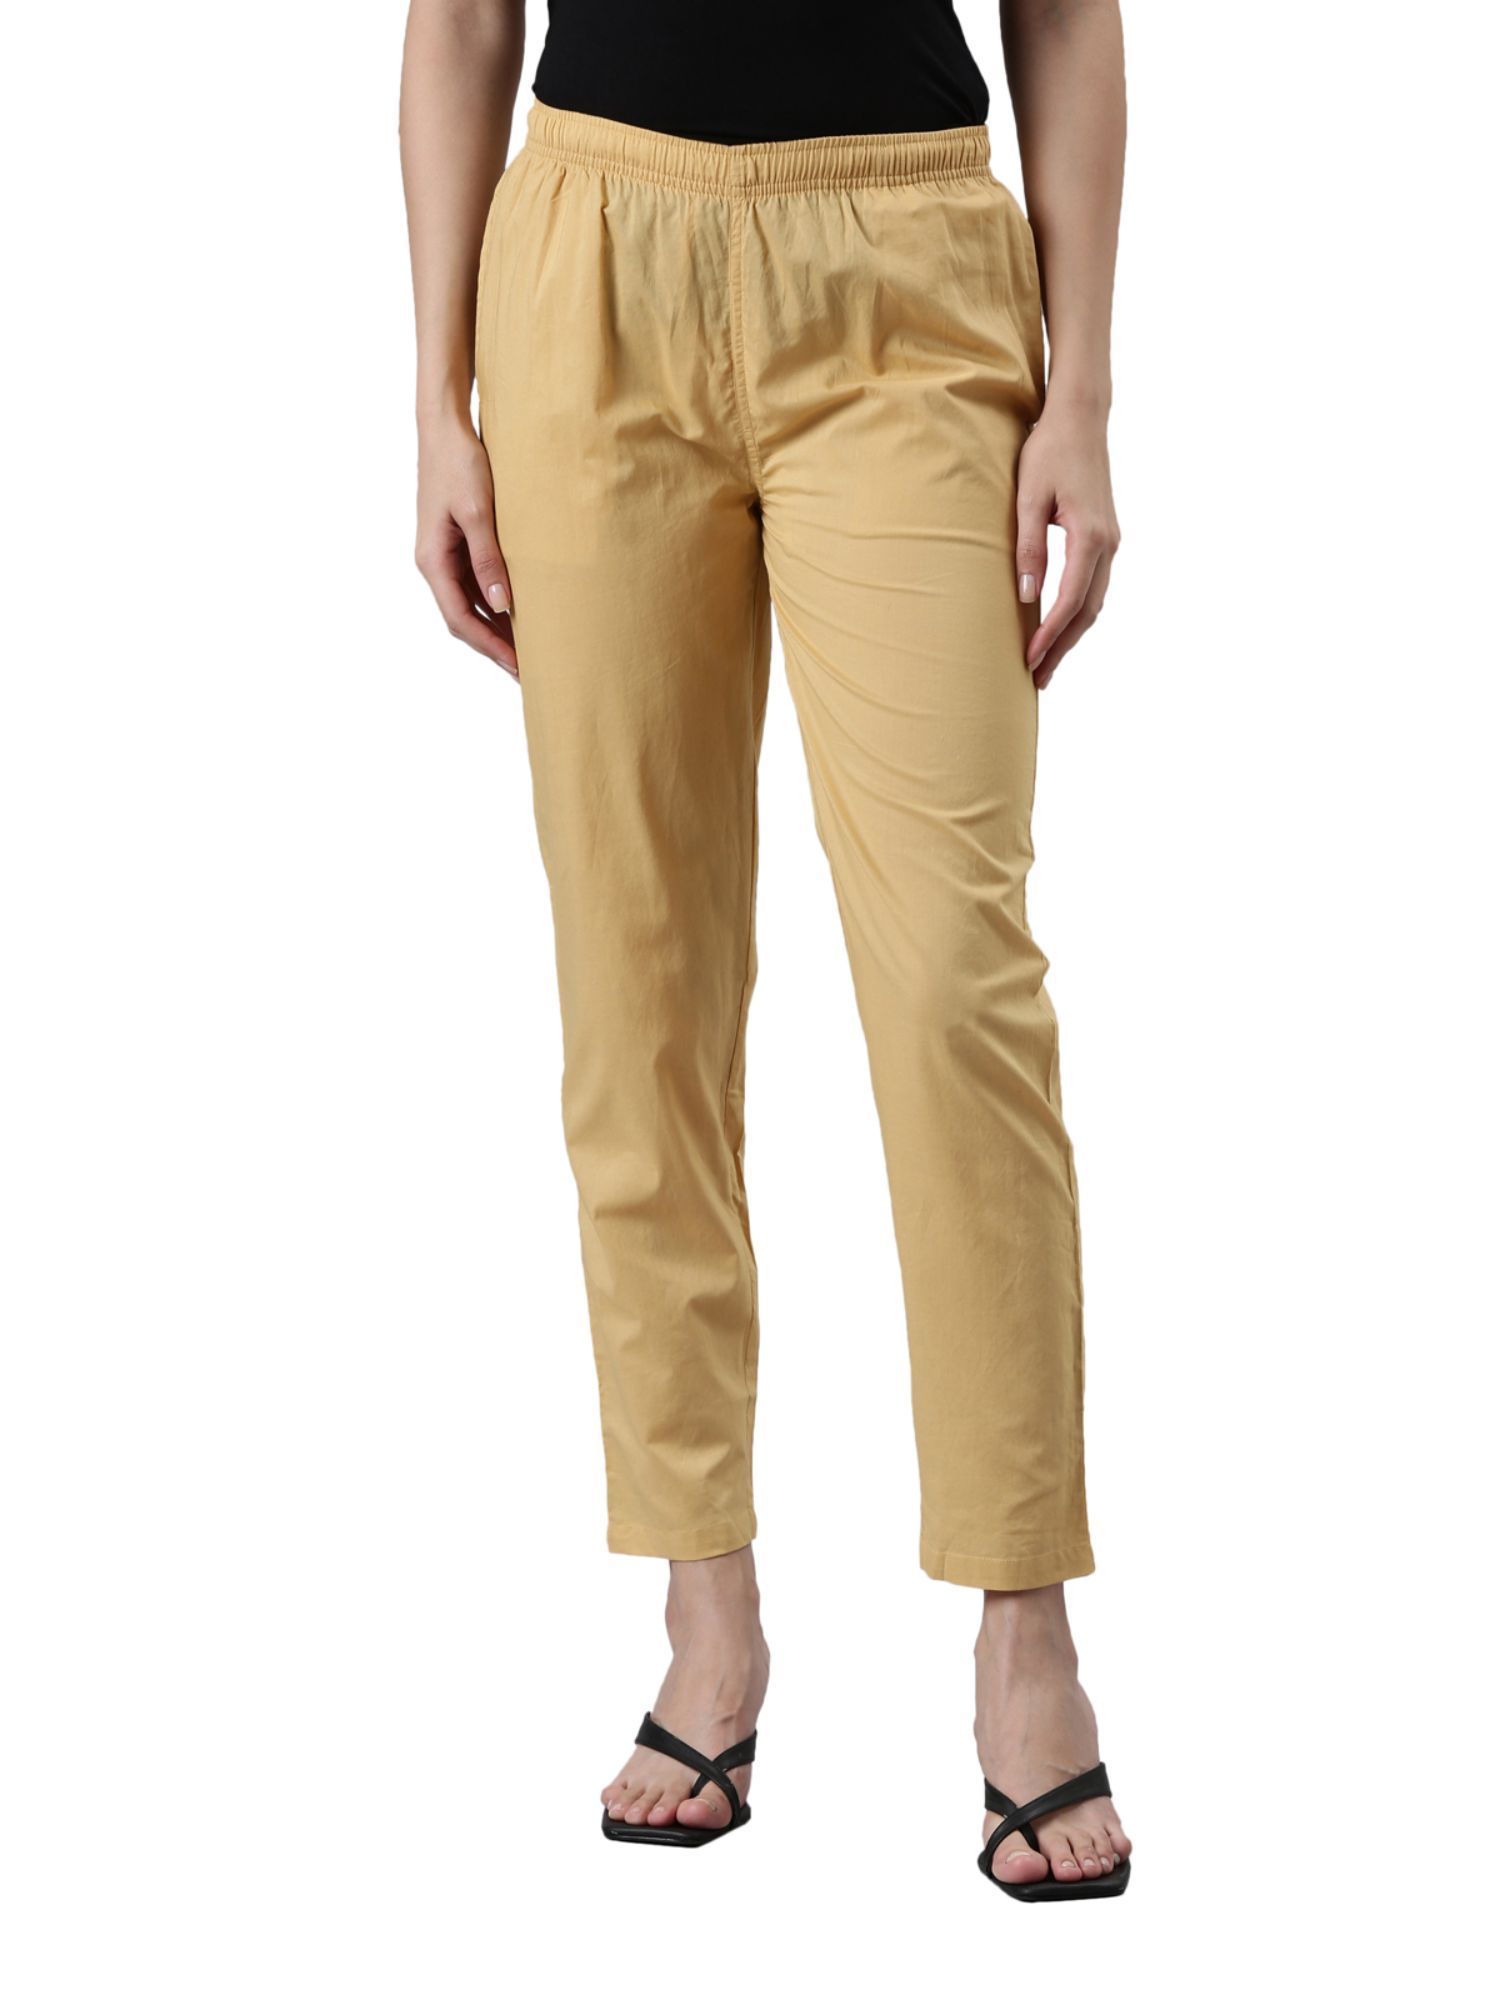 Buy Cotton Palazzo Pants & Women's Metallic Pants - Apella